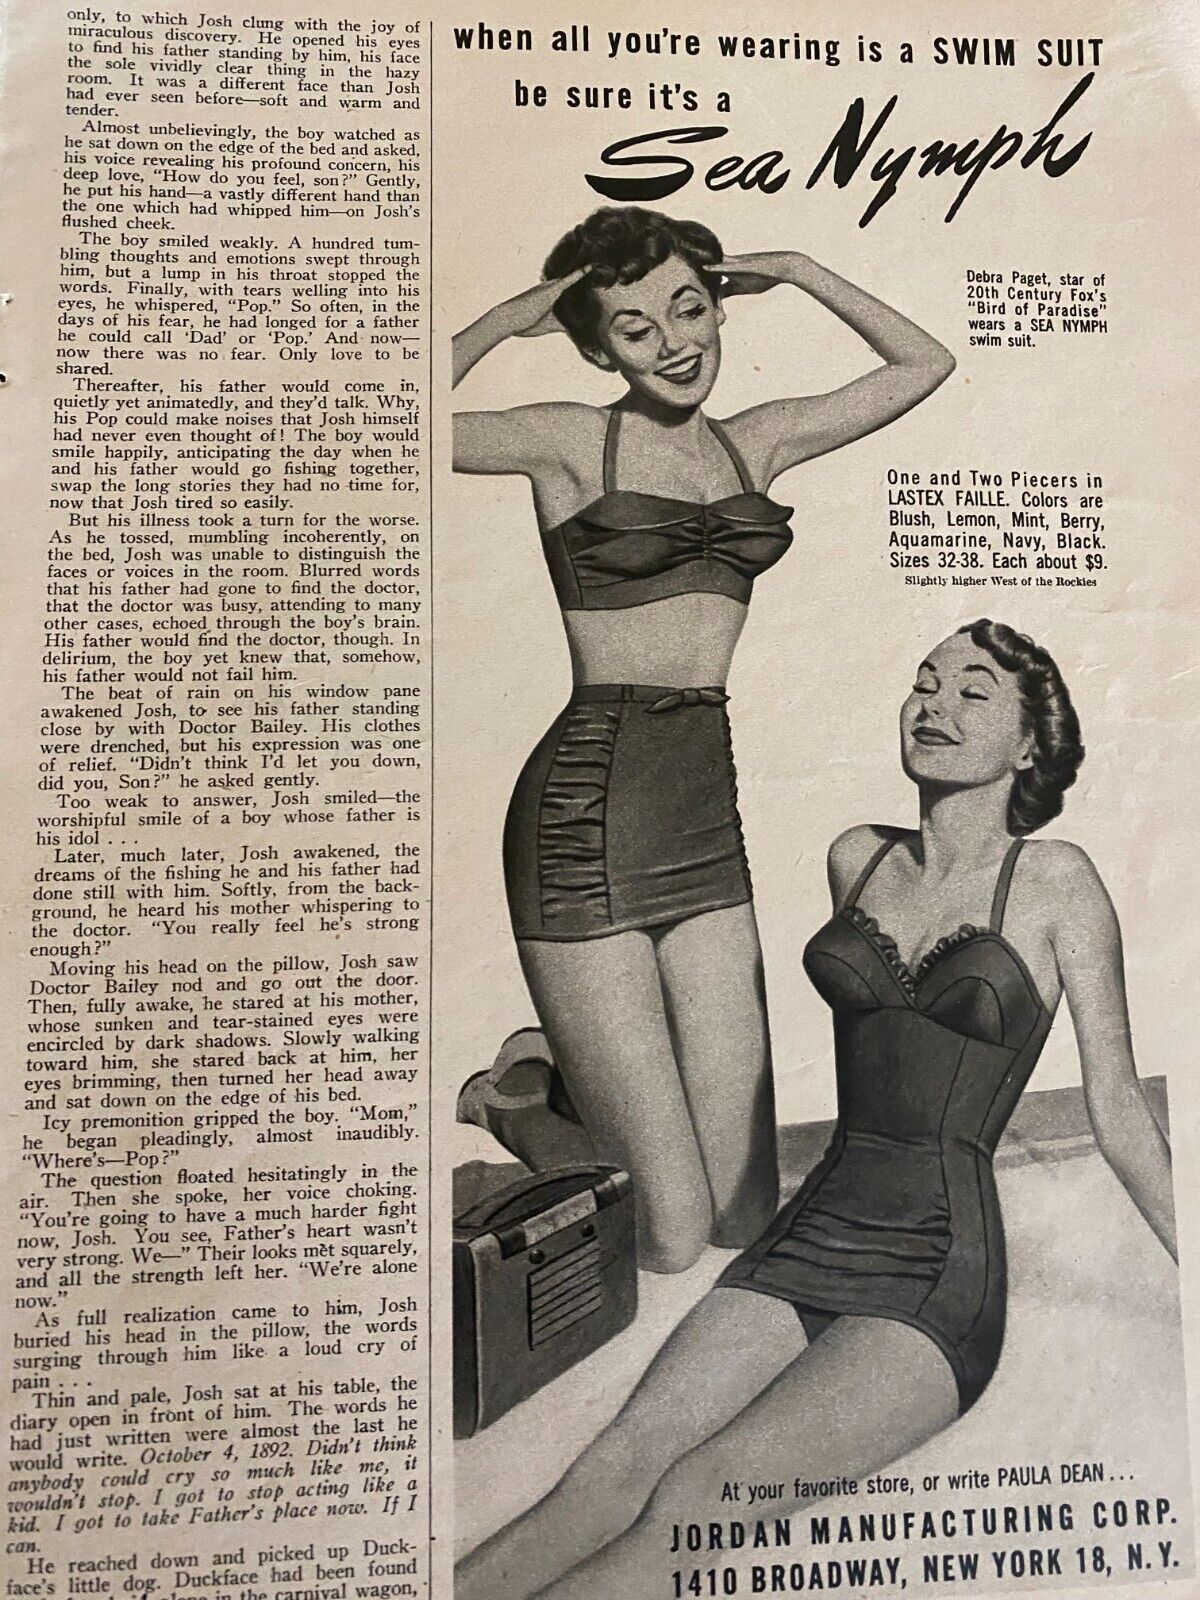 Sea Nymph Bathing Suits, Vintage Print Ad